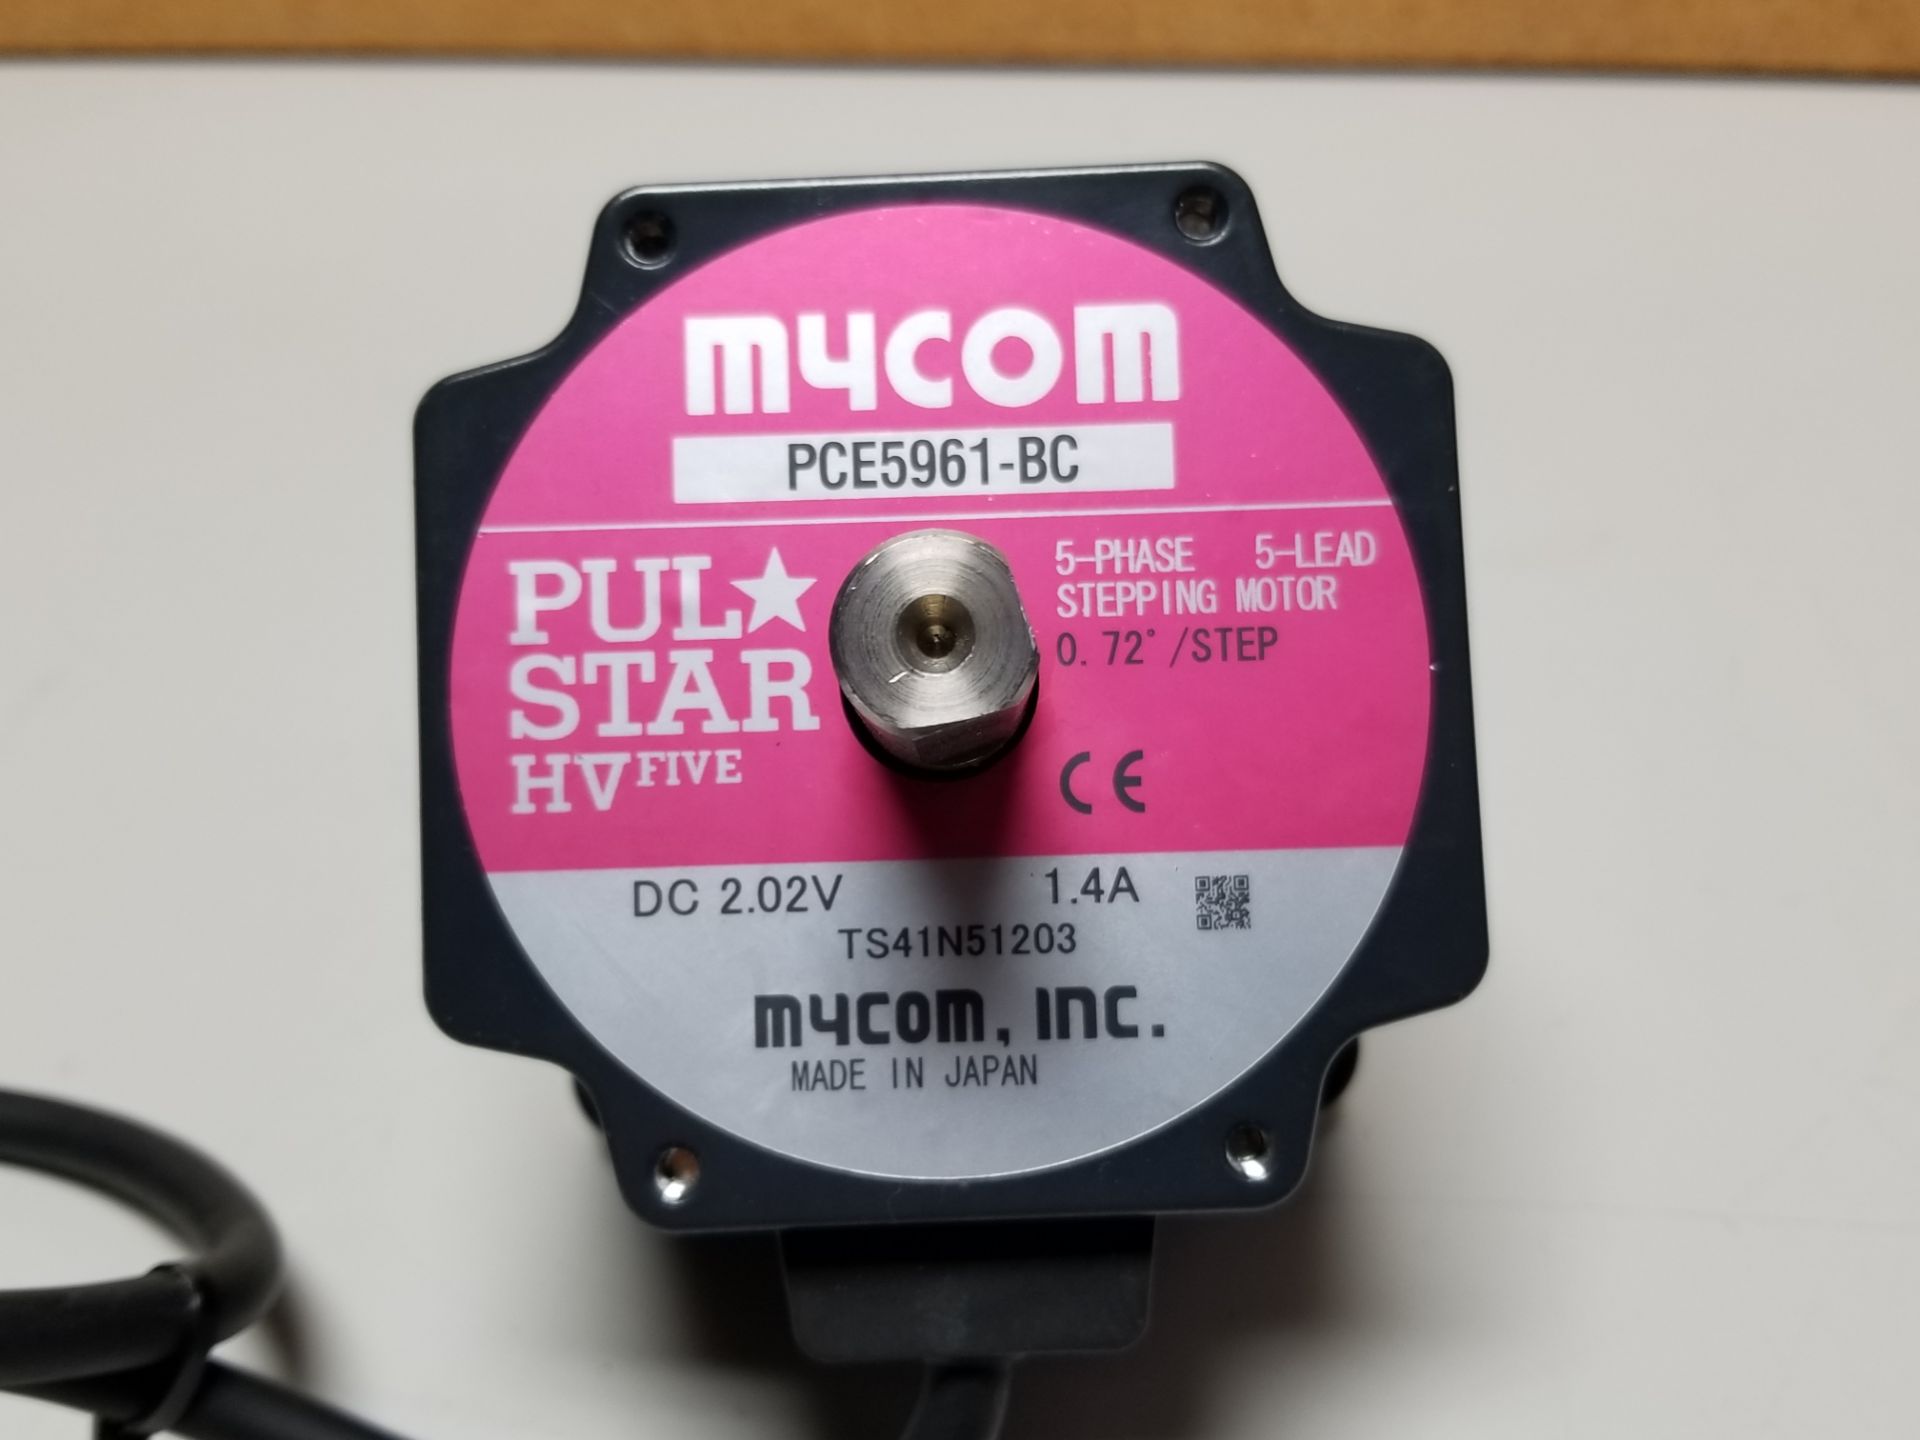 Mycom PulStar HV Five 5 Phase Stepper Motor - Image 4 of 4